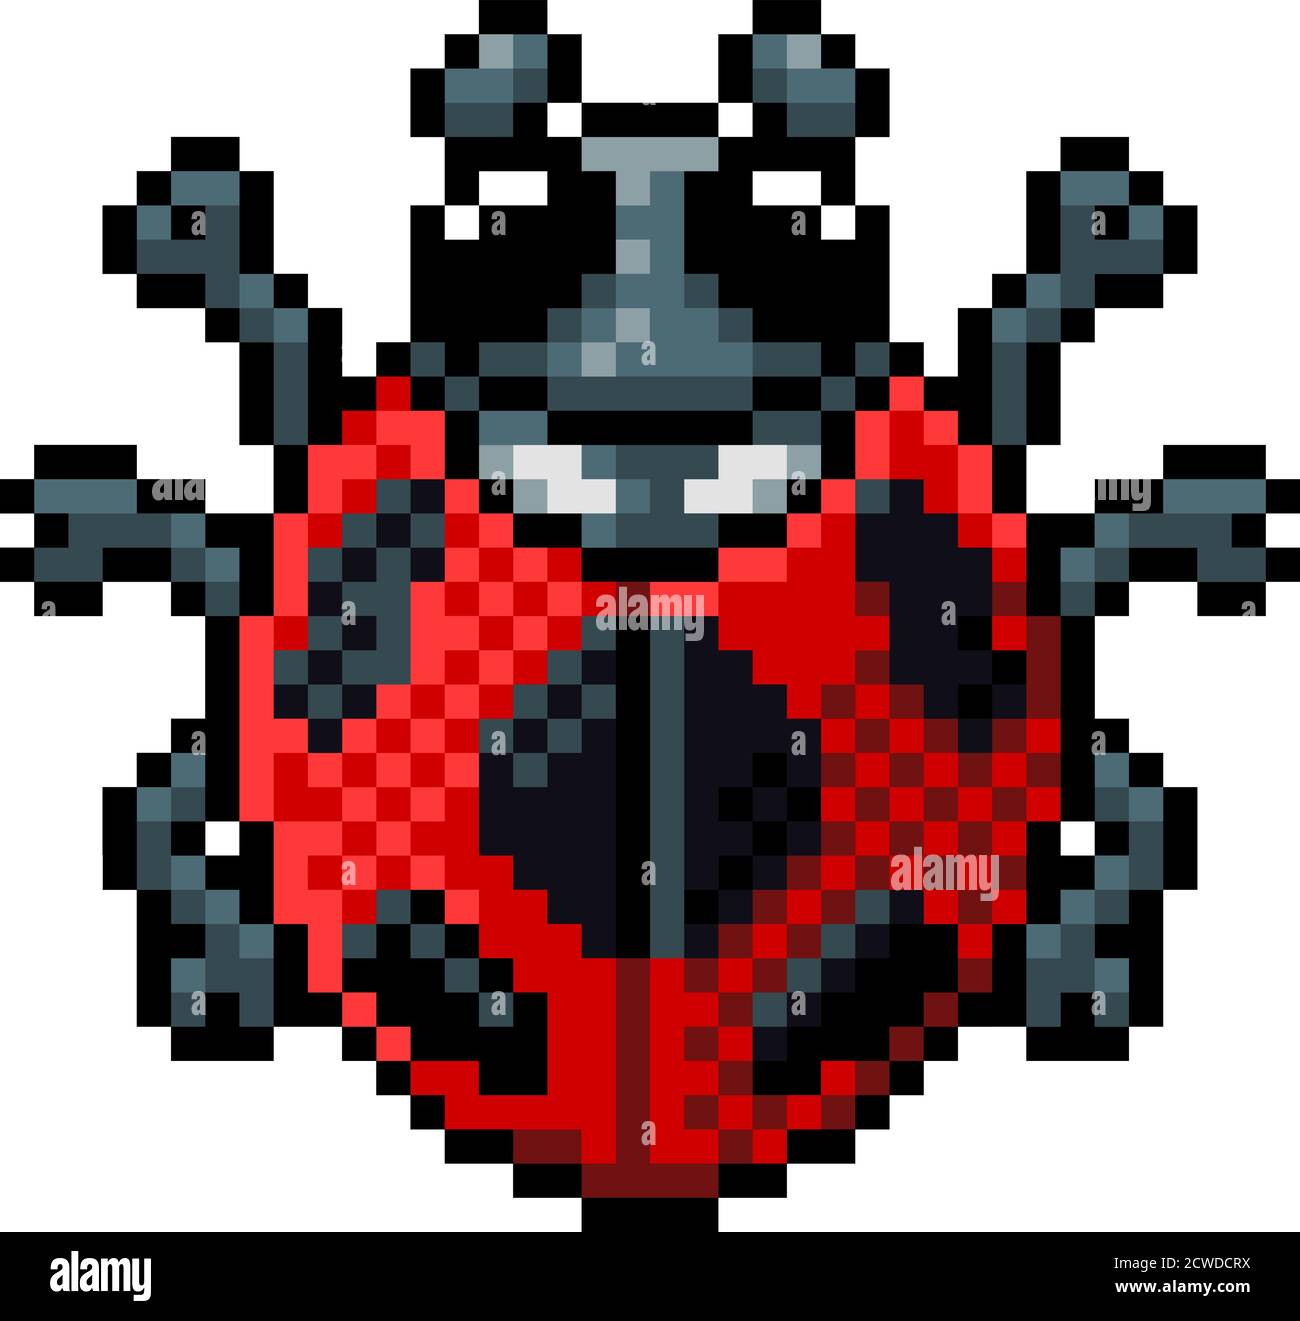 Ladybug Bug Insect Pixel Art Game Cartoon Icon Stock Vector